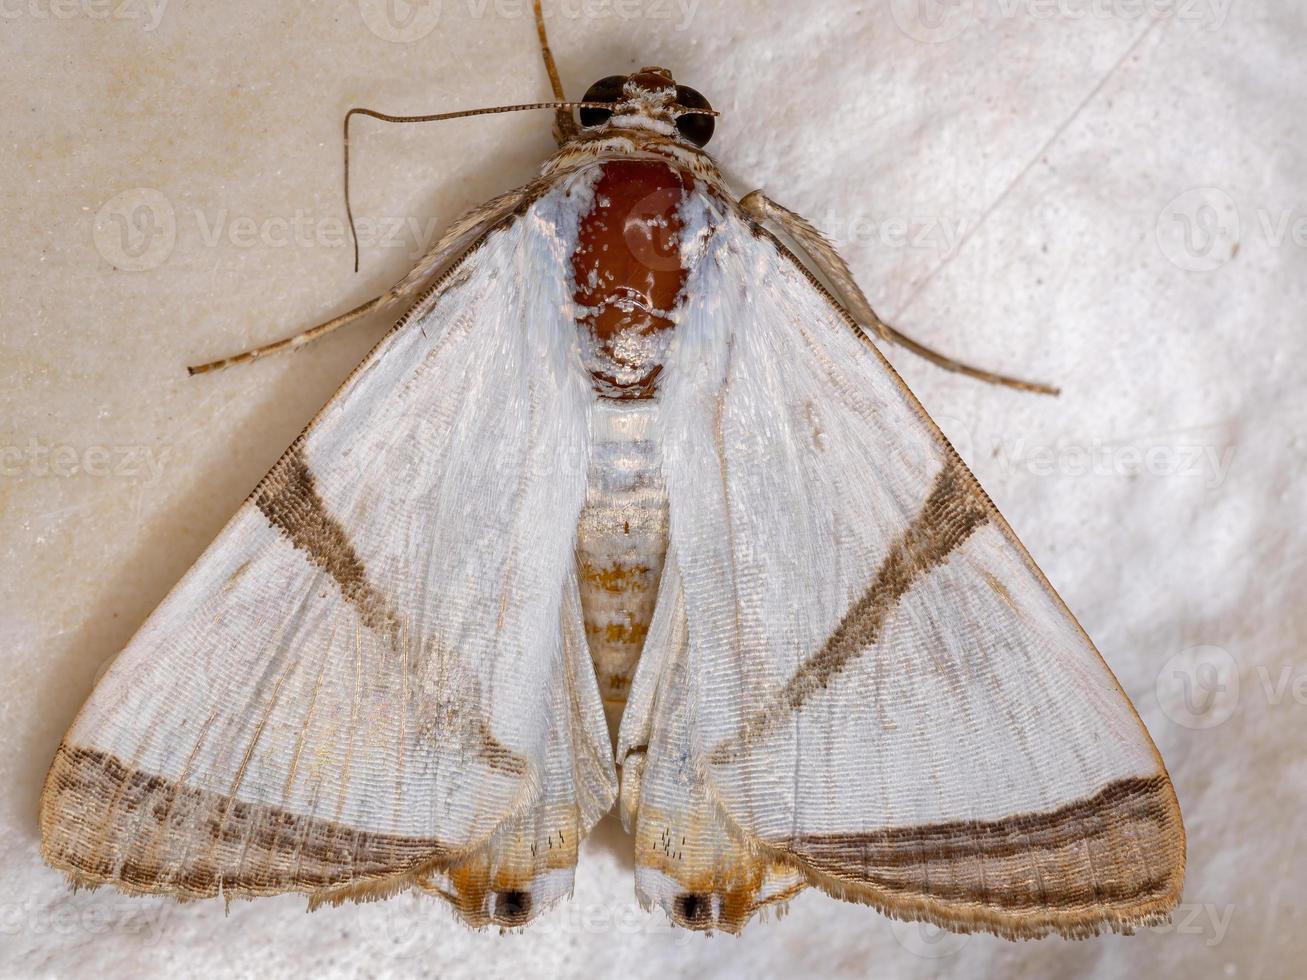 White Underwing moth photo